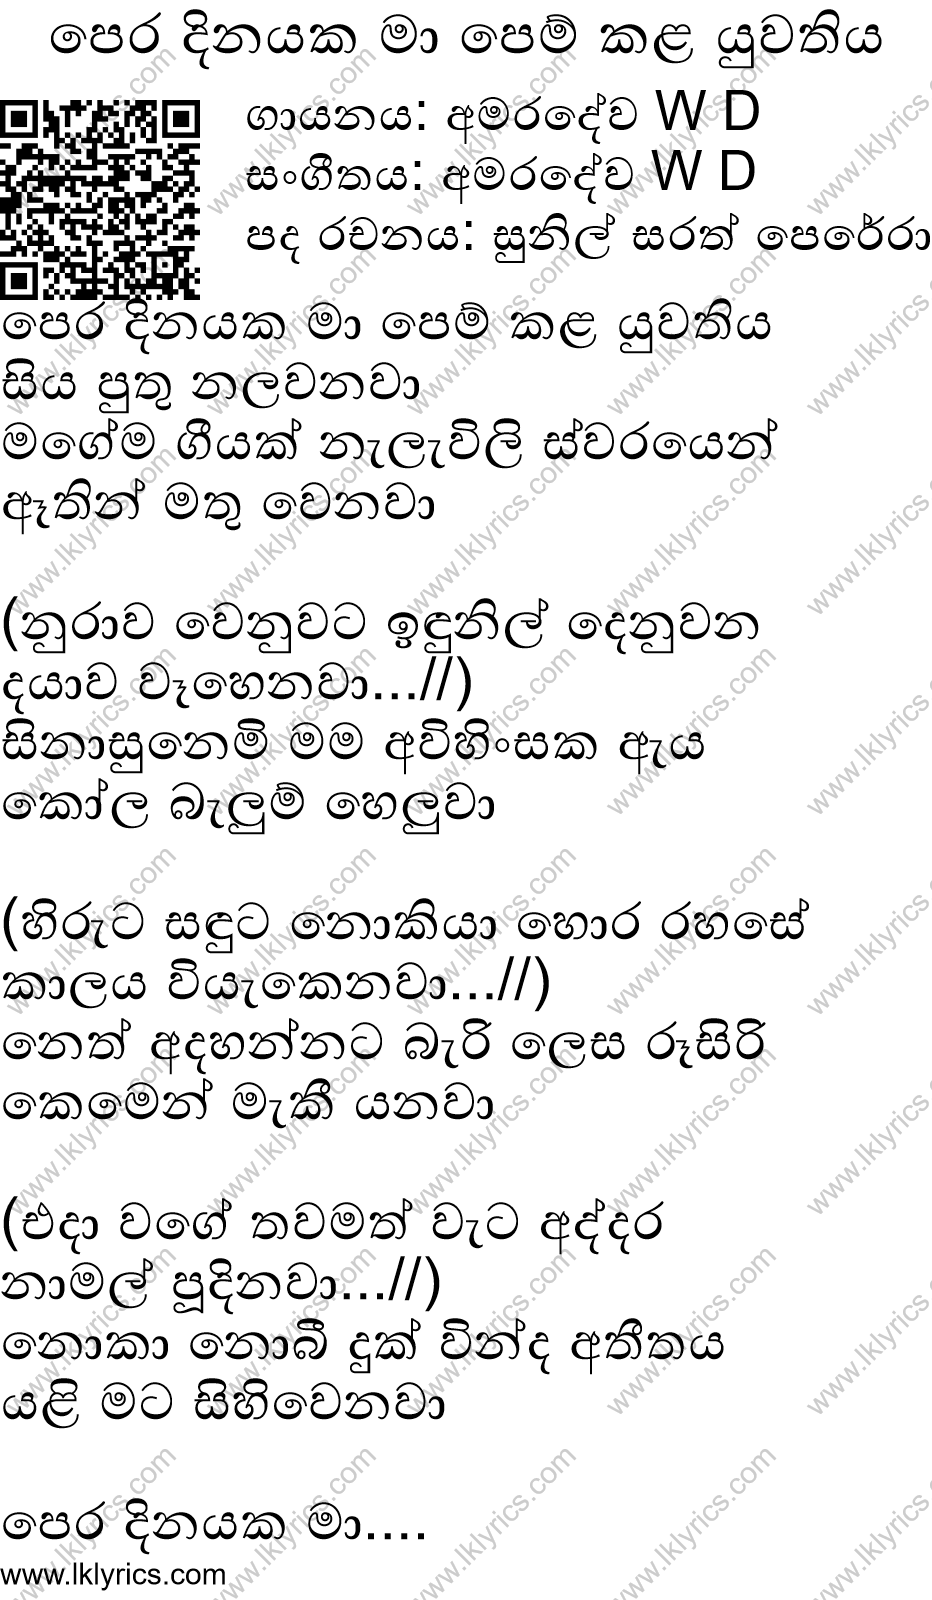 Peradinayaka Maa Pemkala Yuwathiya Lyrics